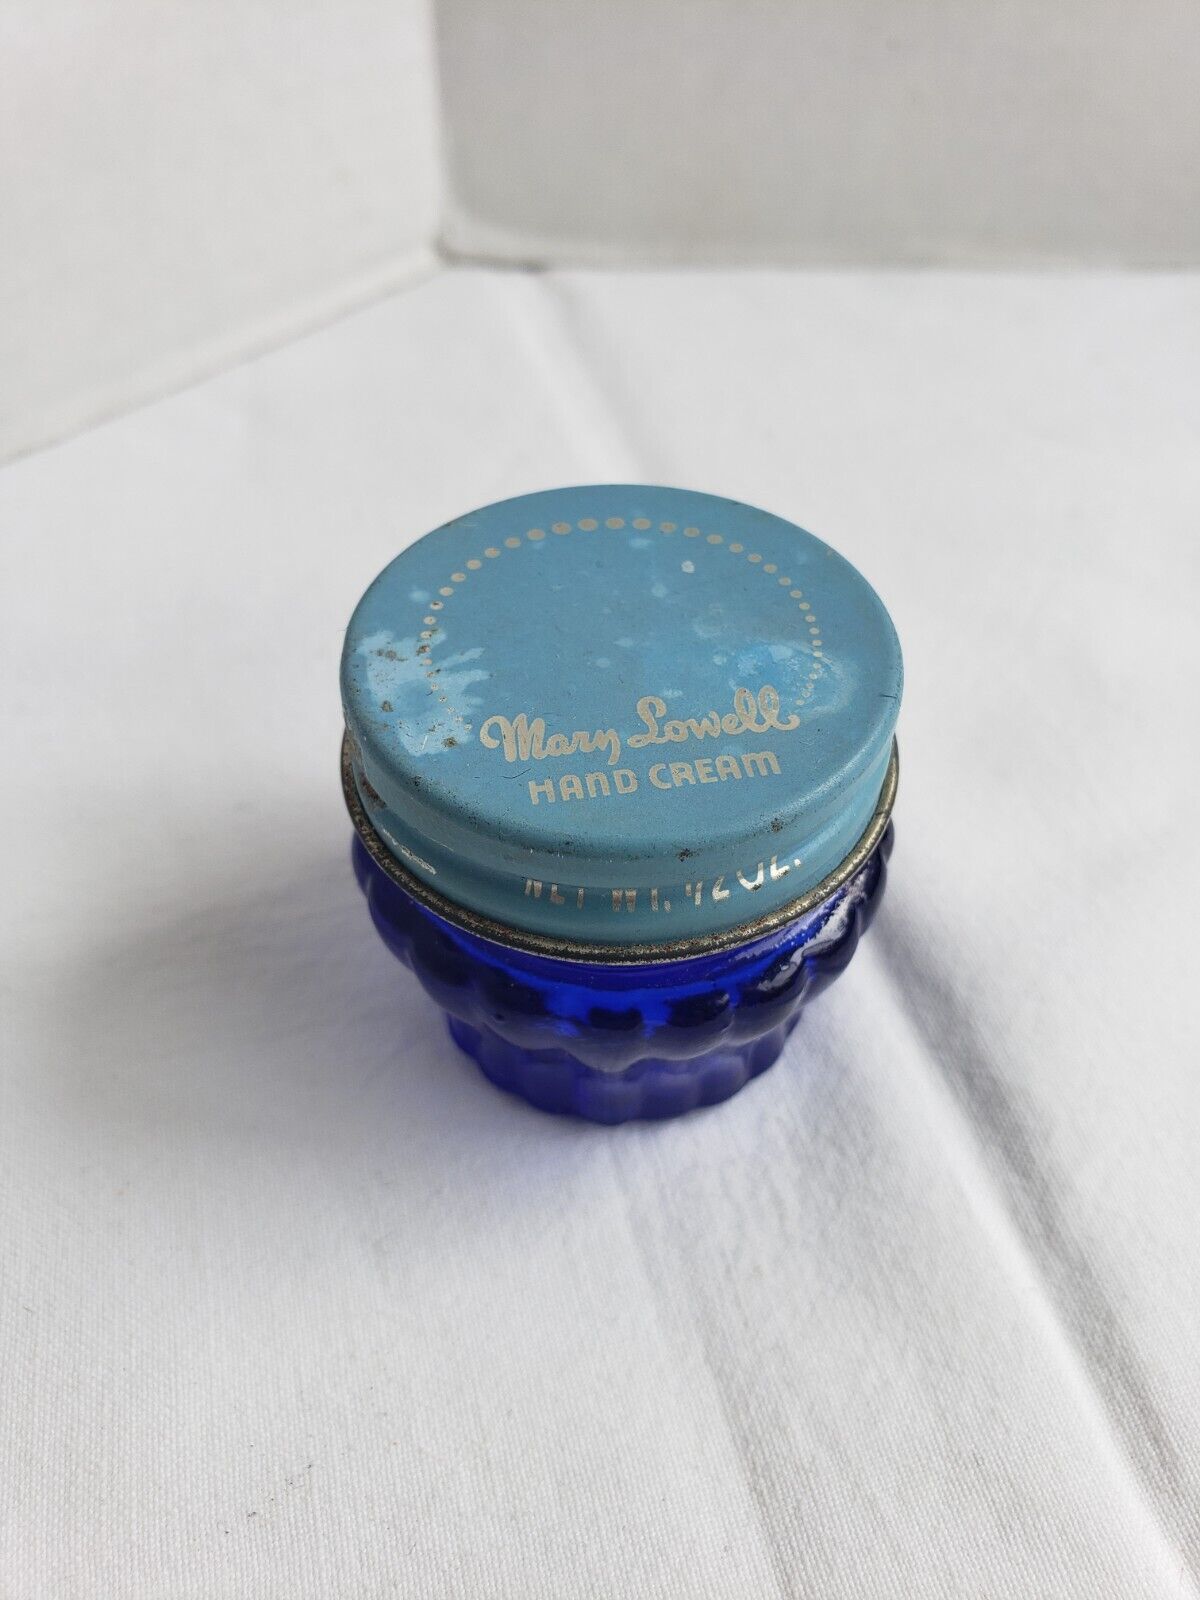 Mary Lowell Hand Cream Blue Jar EMPTY #SH 1